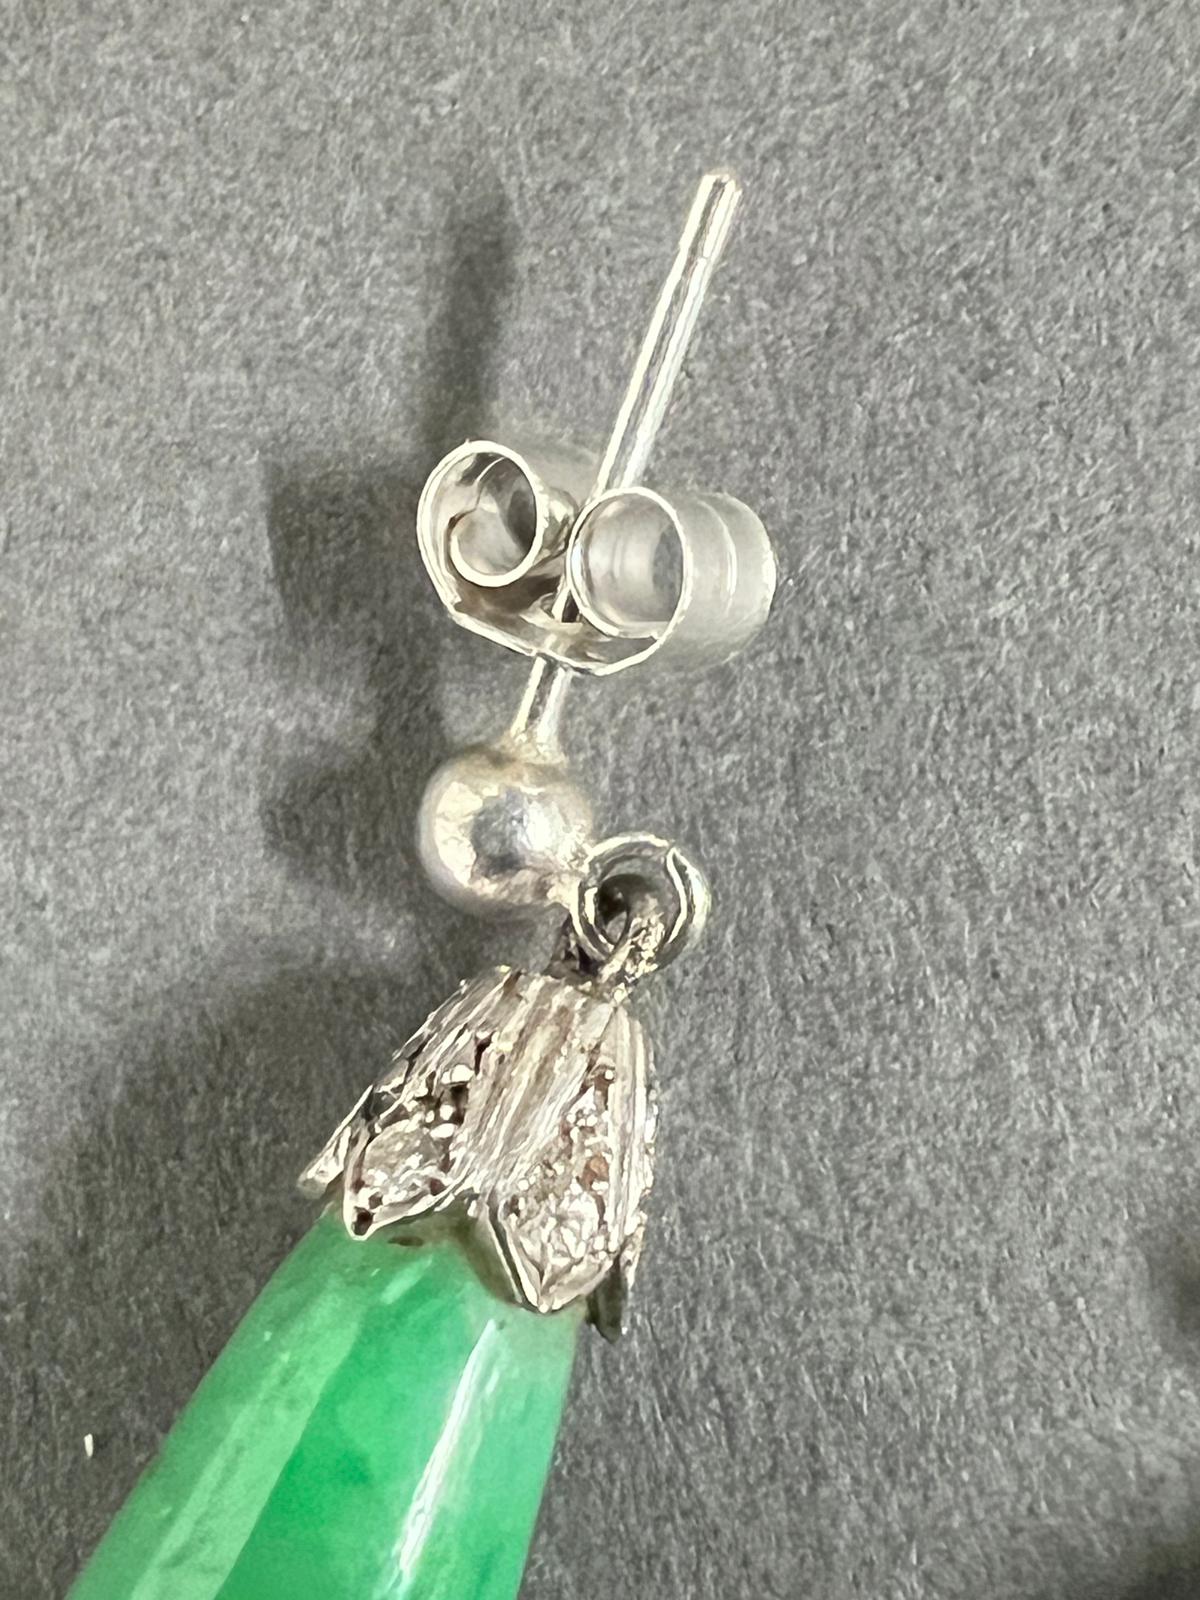 A pair of Chinese jade drop earrings - Image 4 of 6